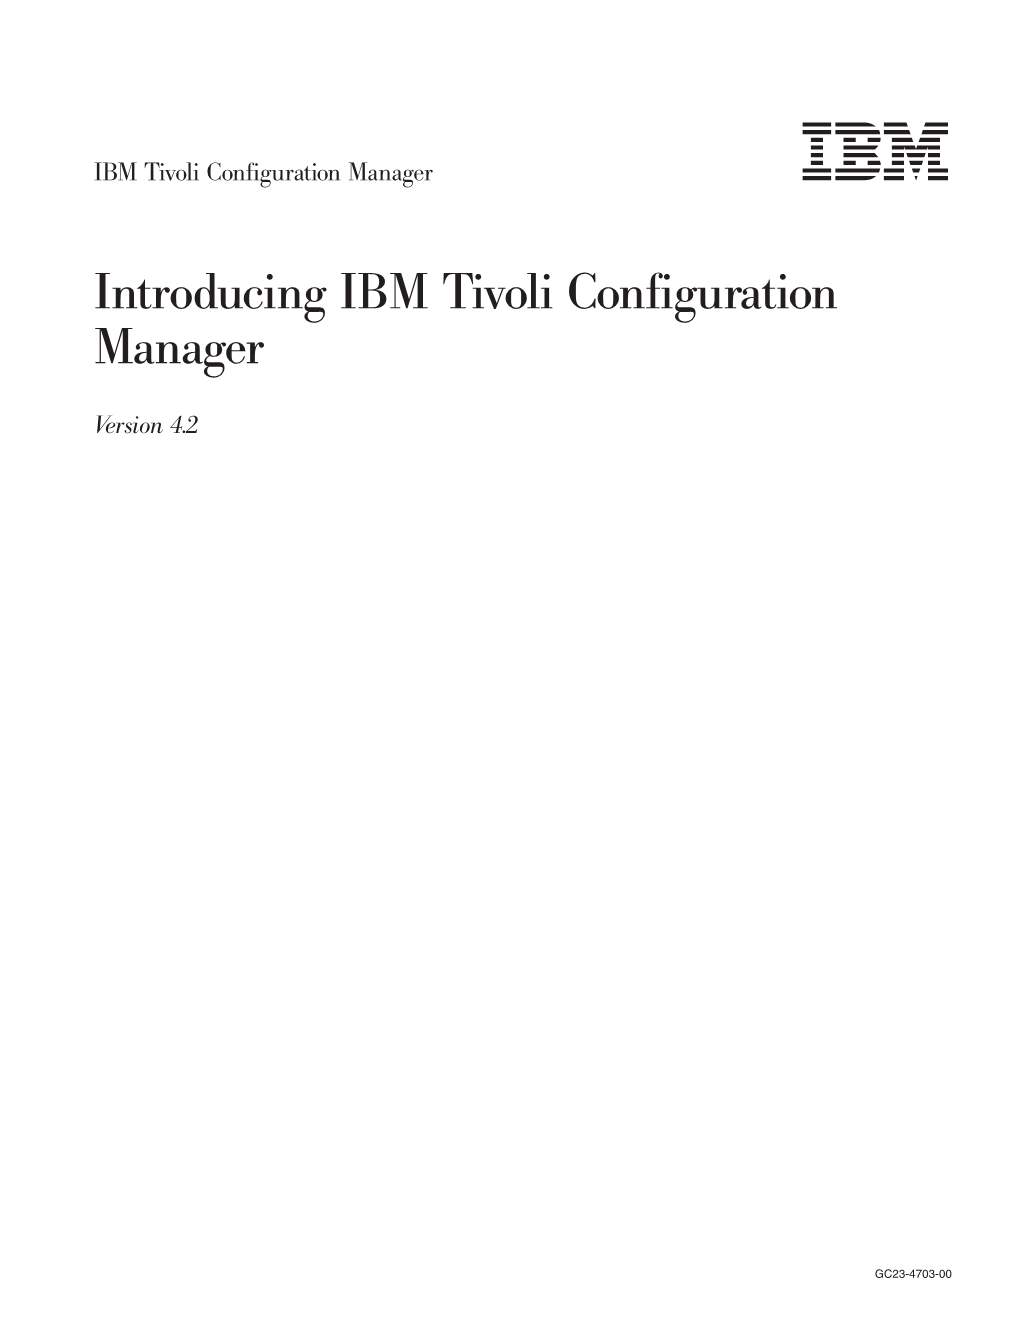 Introducing IBM Tivoli Configuration Manager